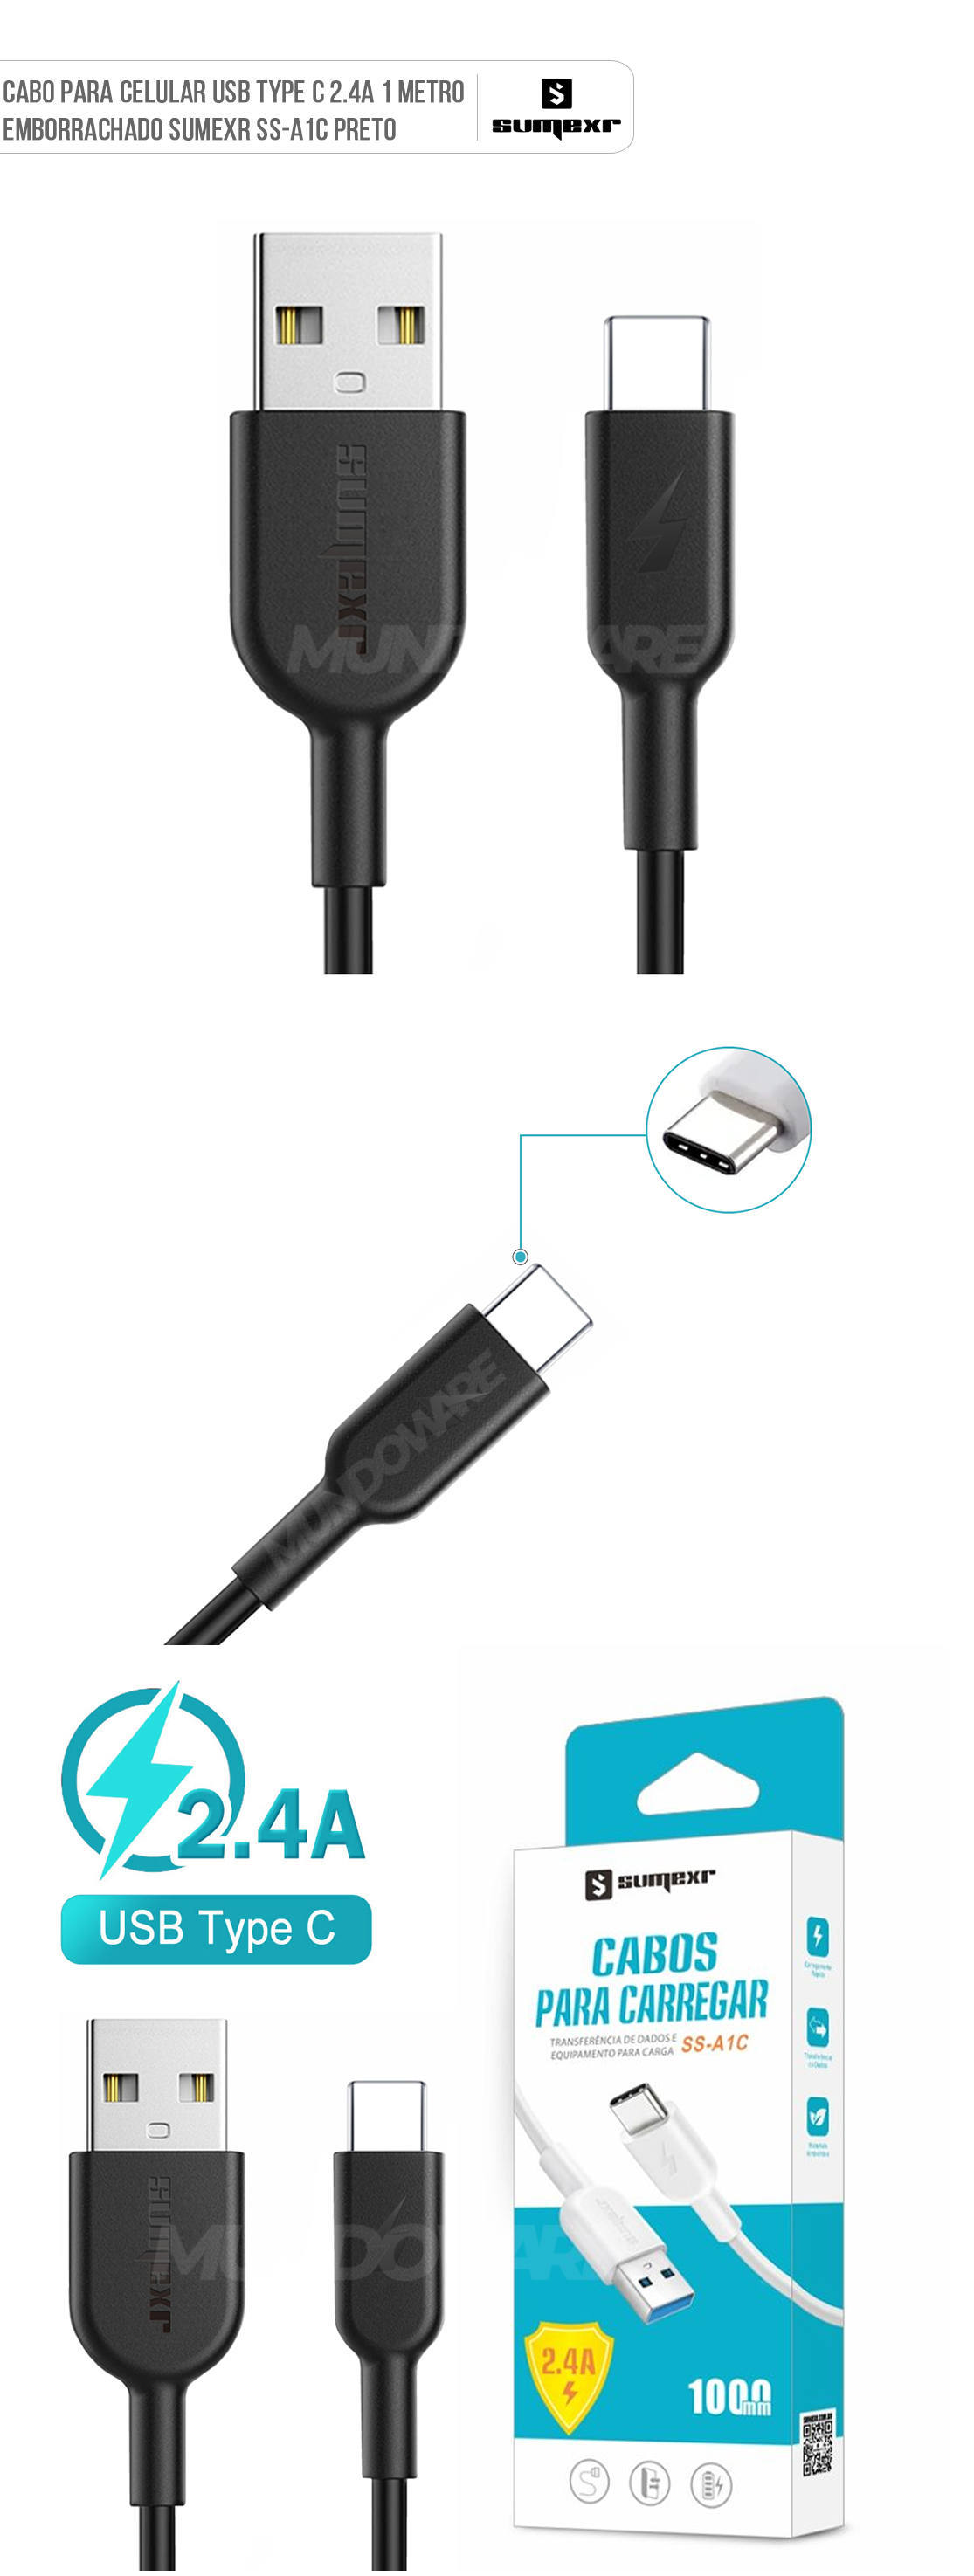 Cabo para Celular USB Type-C 2.4A 1 Metro Emborrachado e Resistente Sumexr SS-A1C Preto